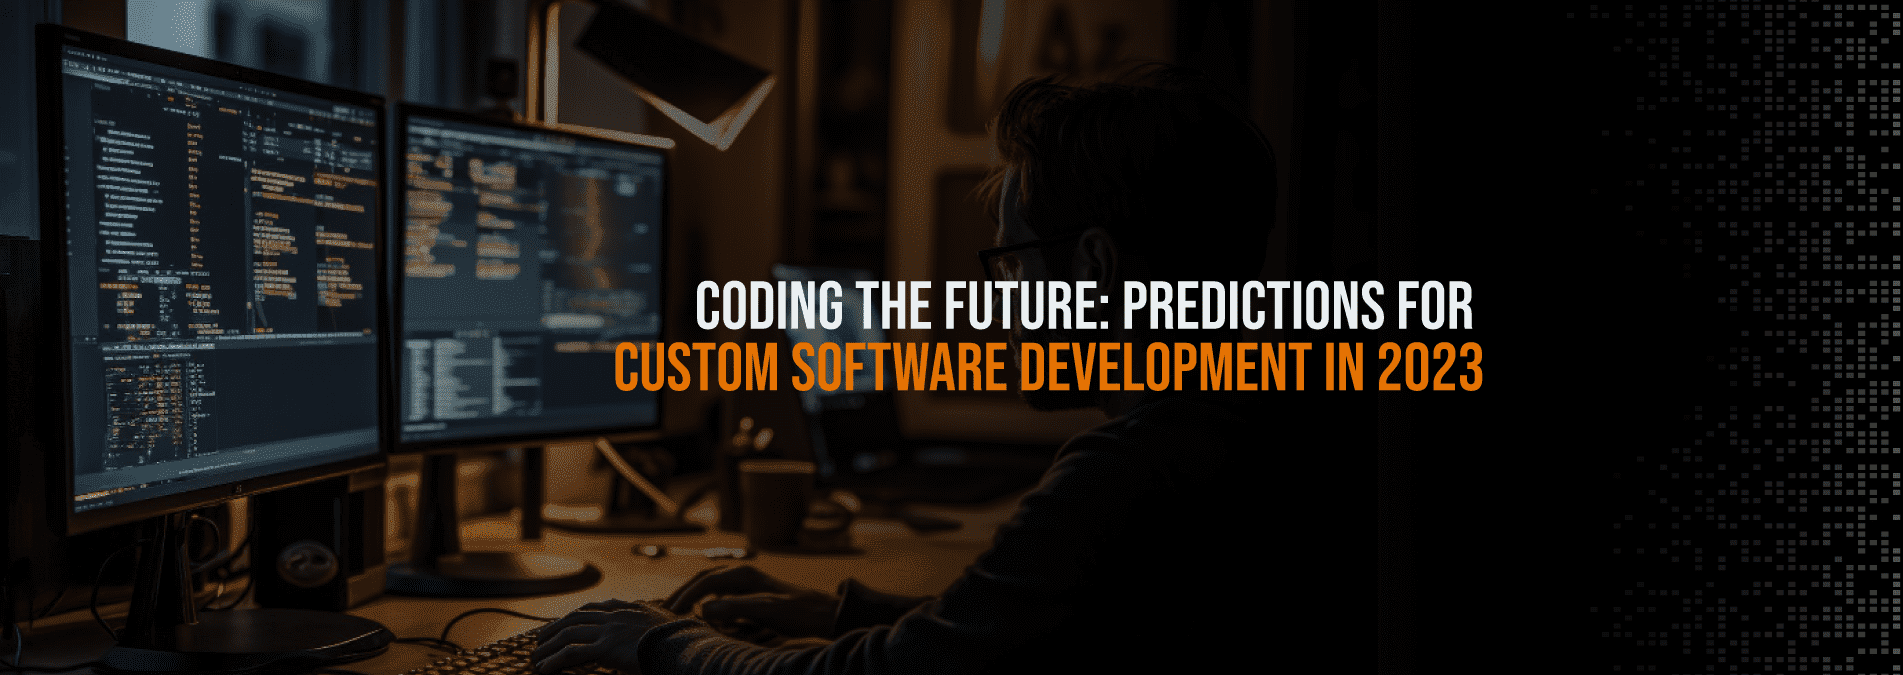 Coding-the-Future-Predictions-for-Custom-Software-Development-in-2023 - Internet Soft